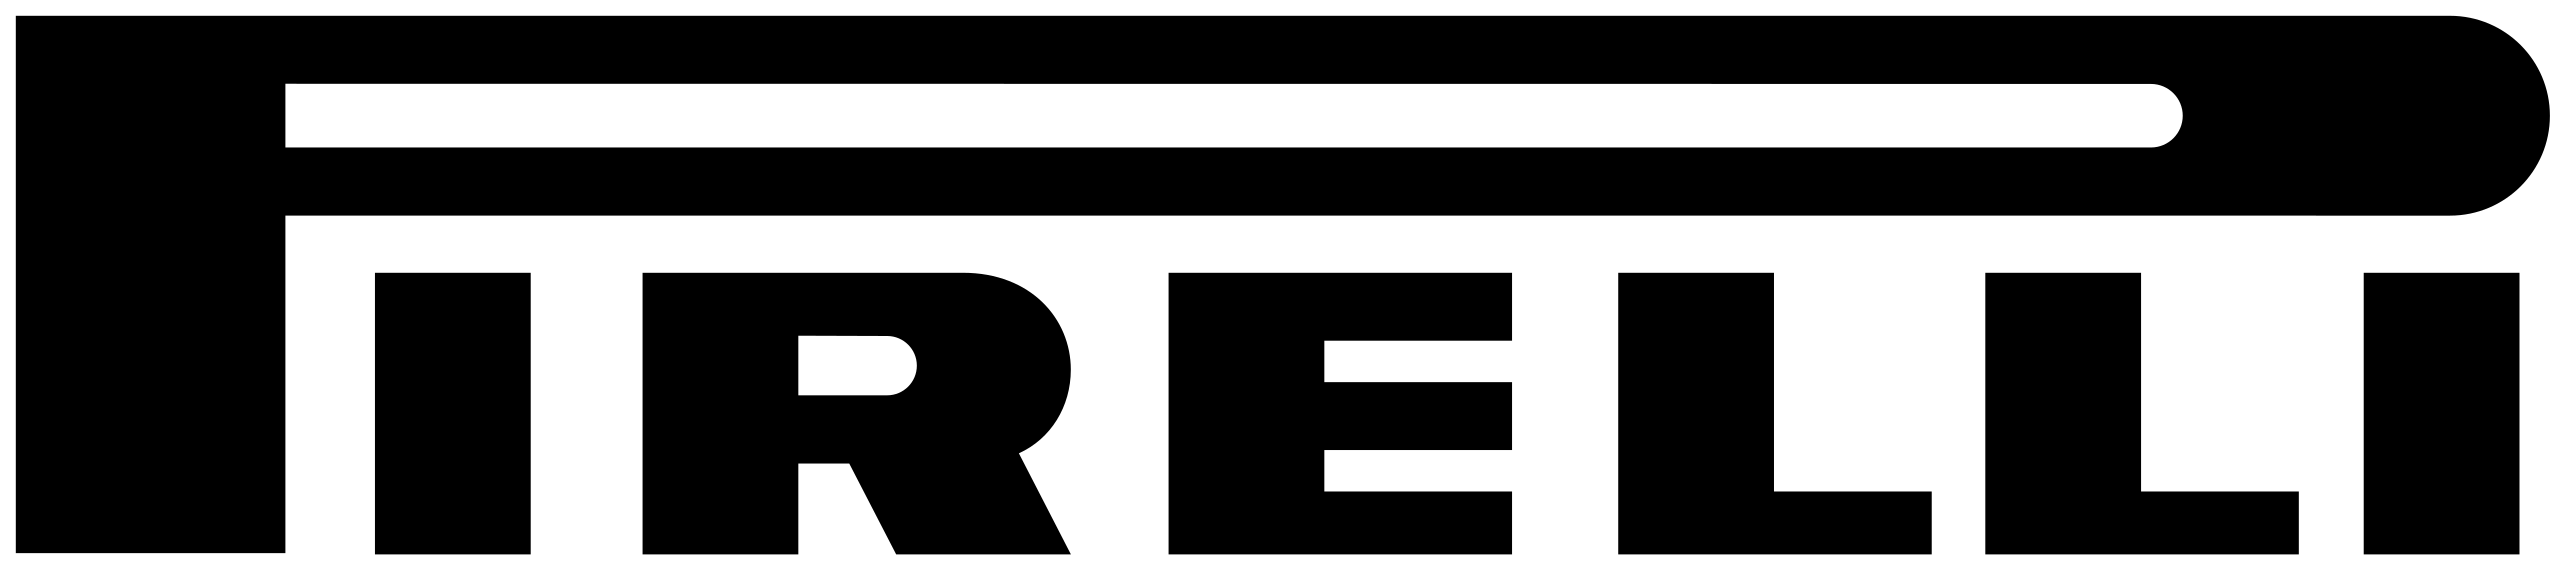 File:Pirelli logo.svg - Wikimedia Commons